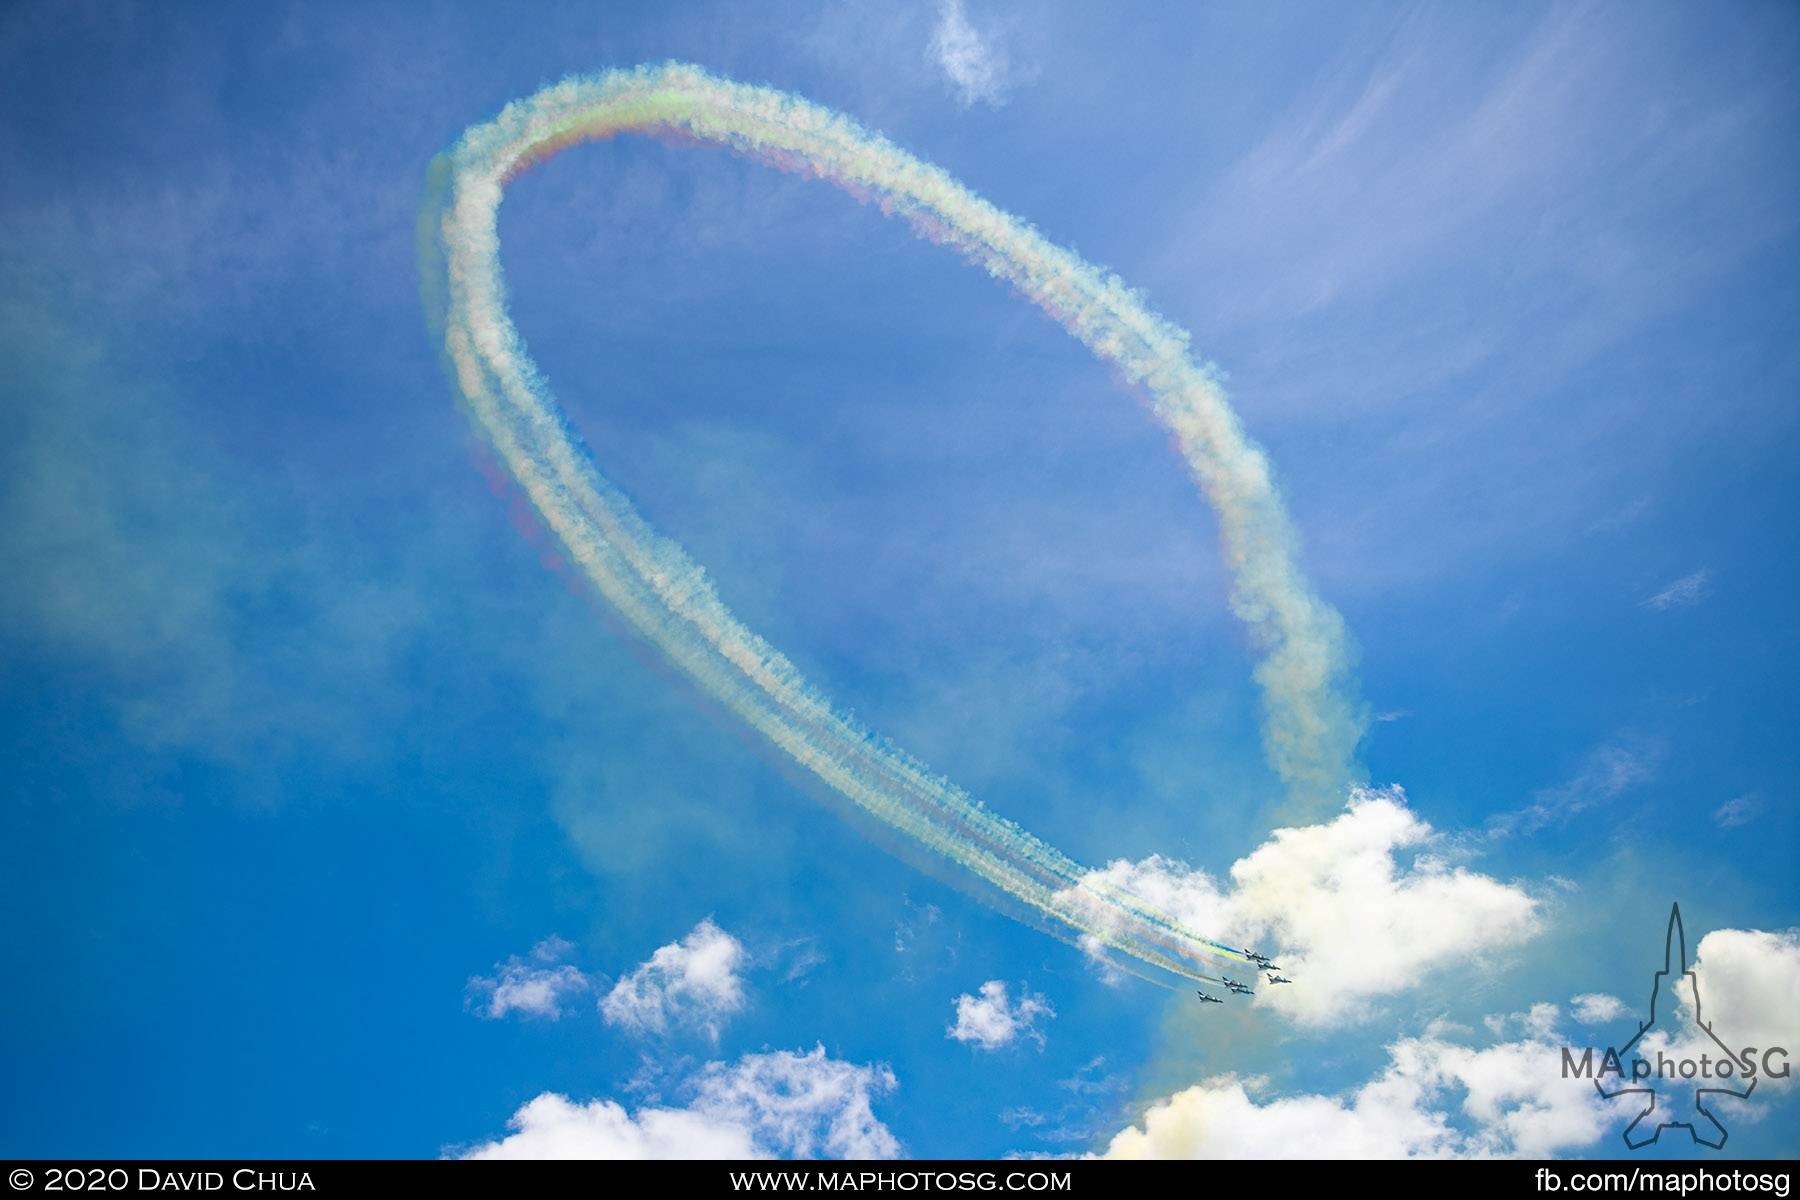 PLAAF Ba Yi Aerobatics Team performs a loop in formation